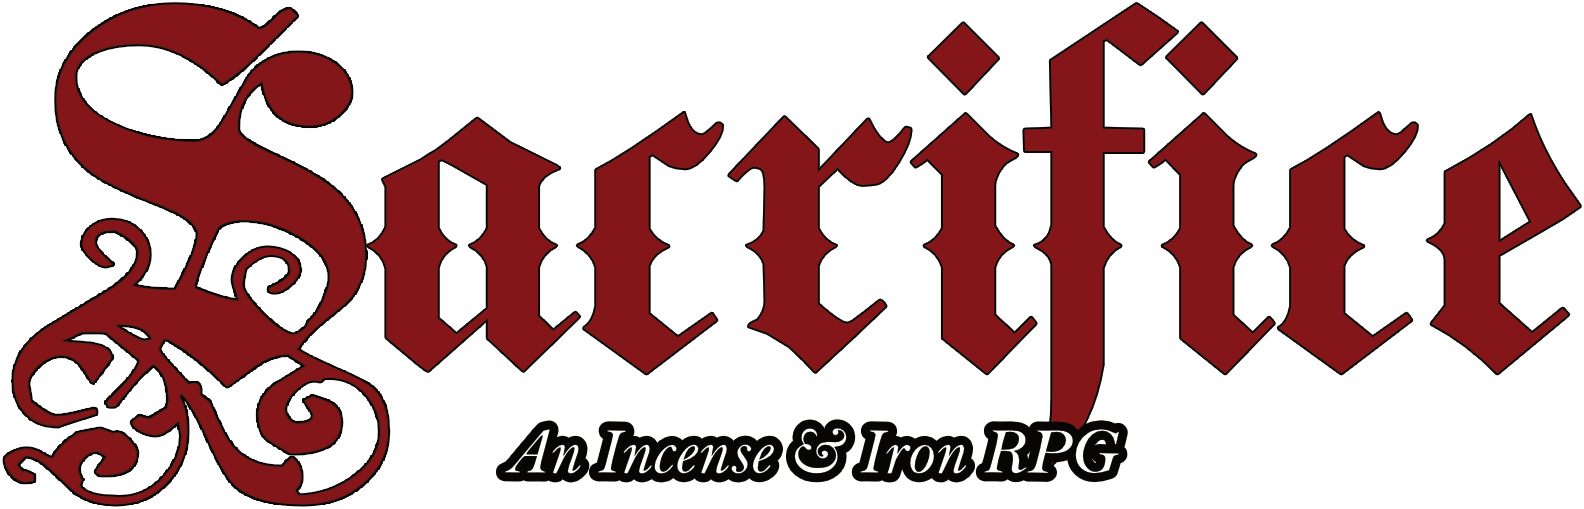 Sacrifice - An Incense & Iron RPG